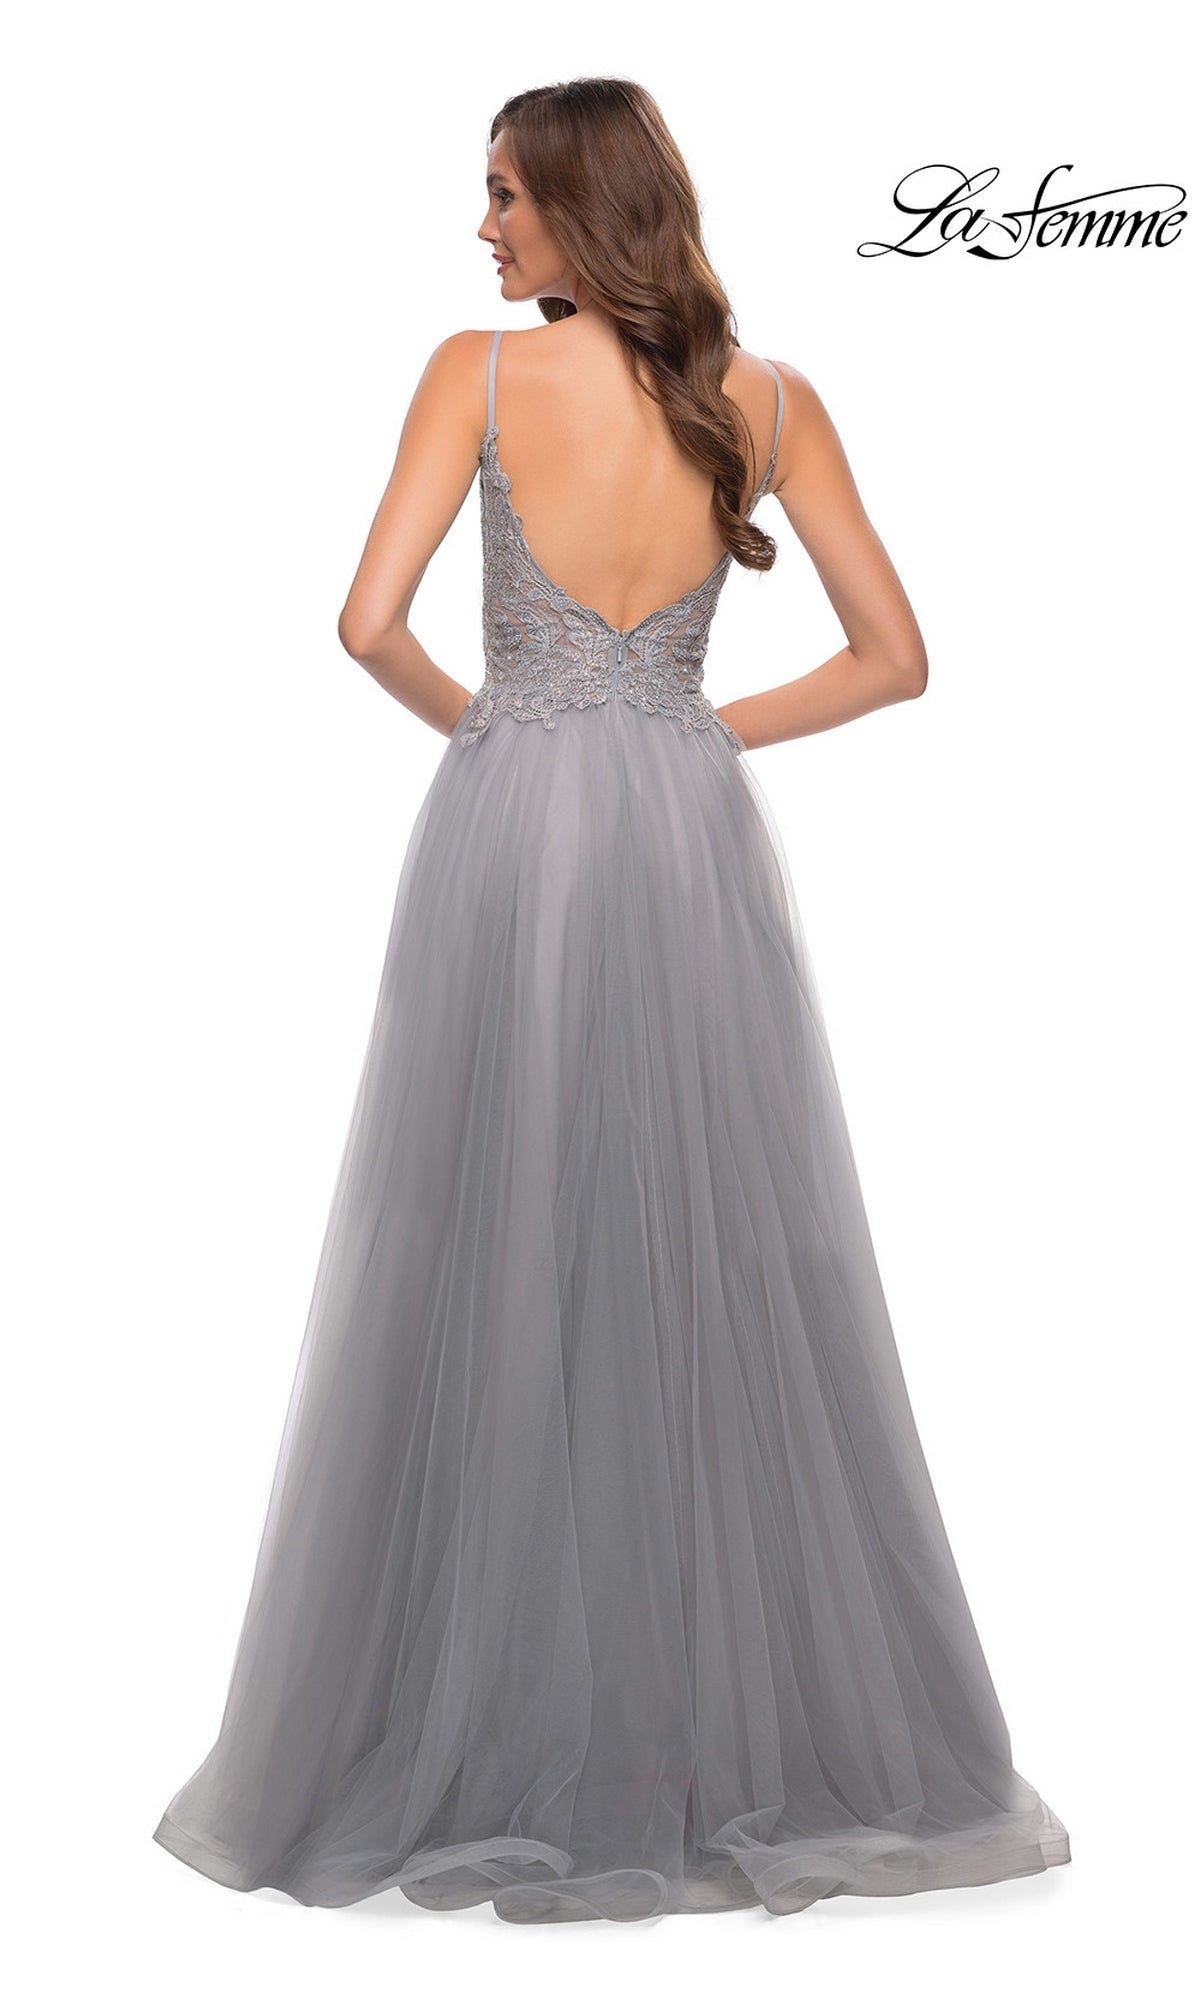  La Femme 29686 Formal Prom Dress